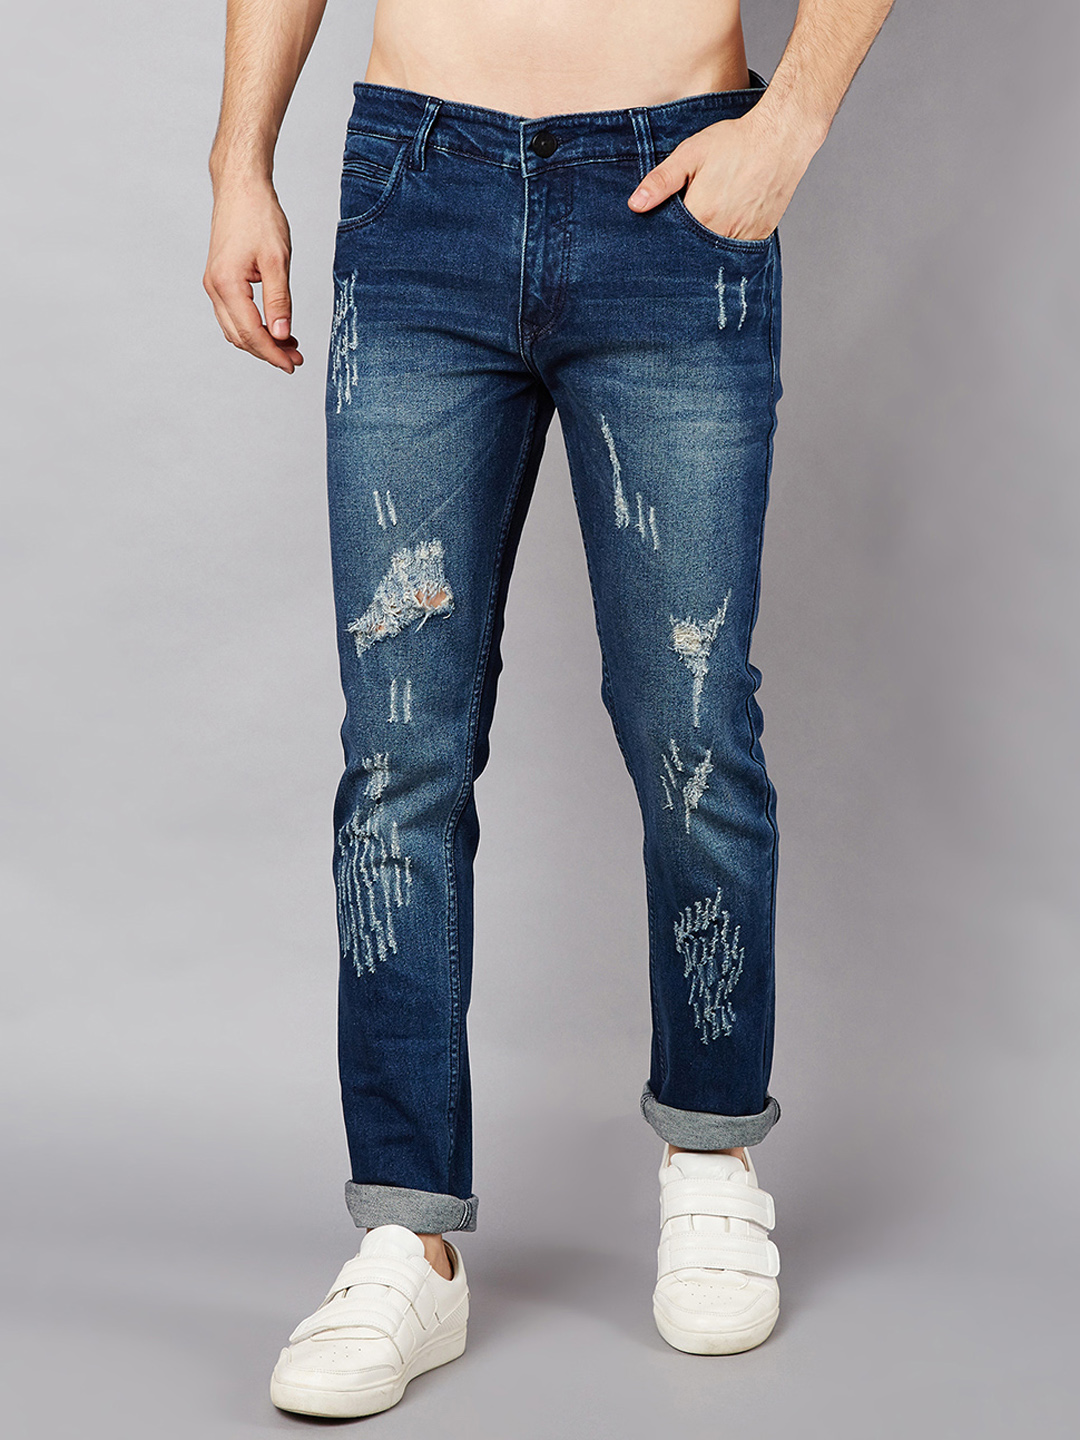 Buy Stylox Men's Slim Fit Blue Jeans Online @ ₹1549 from ShopClues